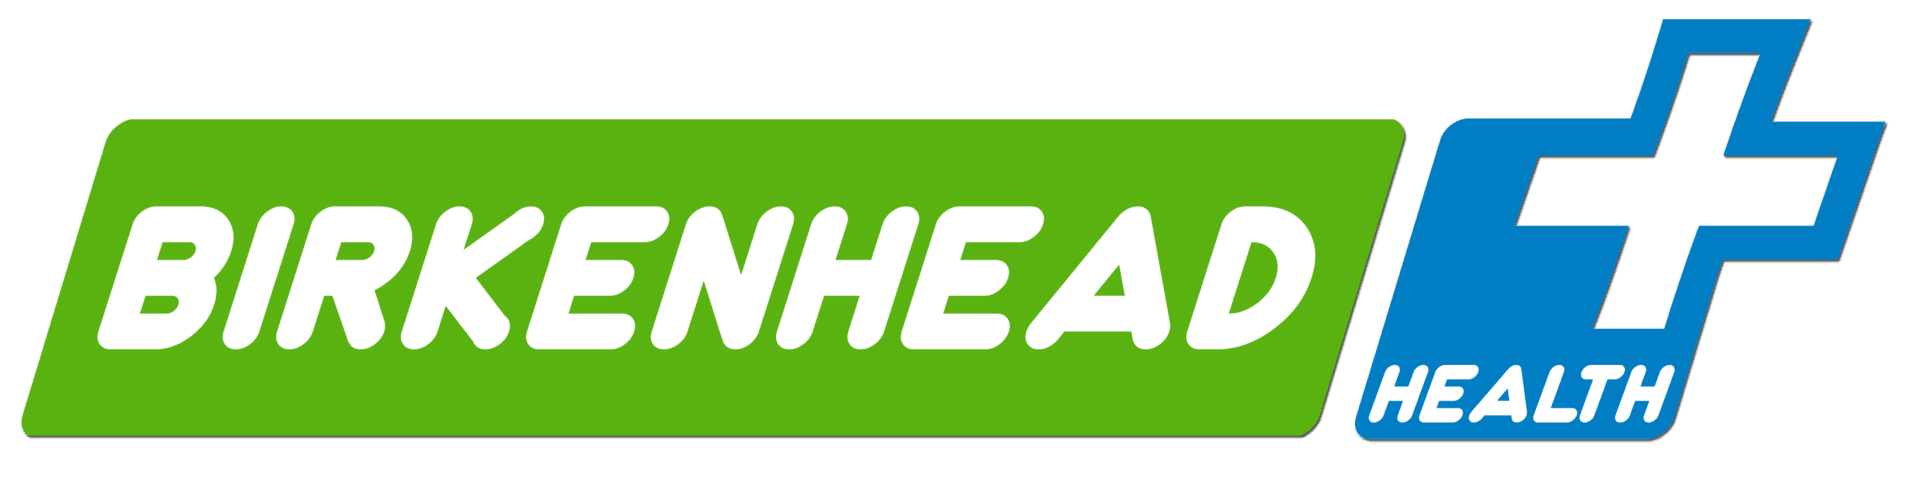 Birkenhead Health Plus